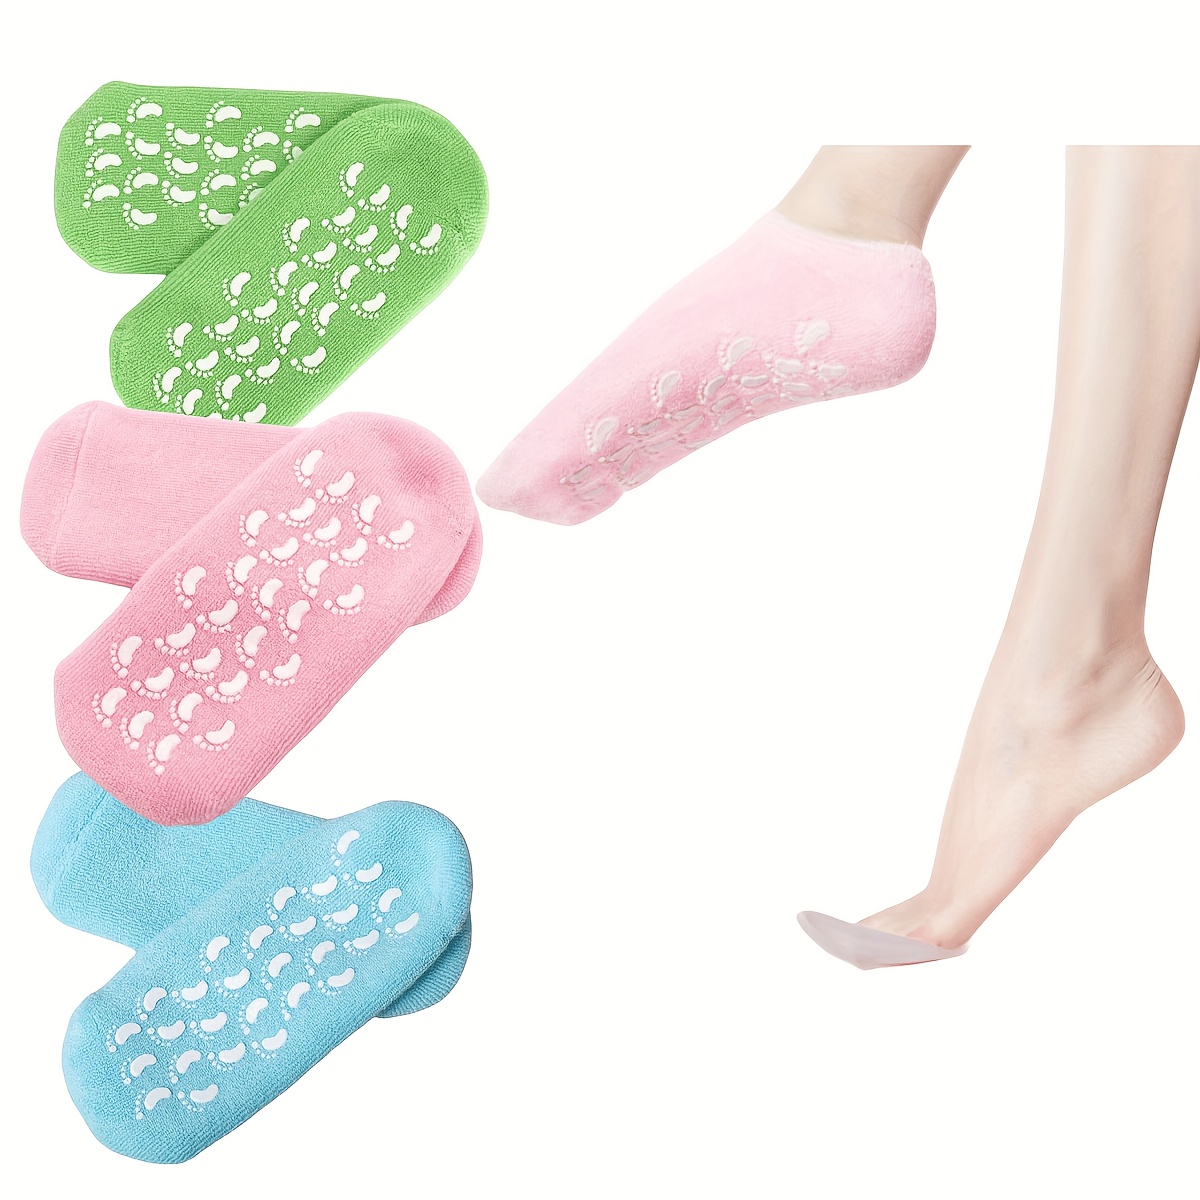 

2pcs Moisturizing Spa Gel Socks, Gel Spa Socks For Softening Dry Cracked Rough Feet Skins, Gel Lining, Washable And Reusable, Reduce Cracked Skin